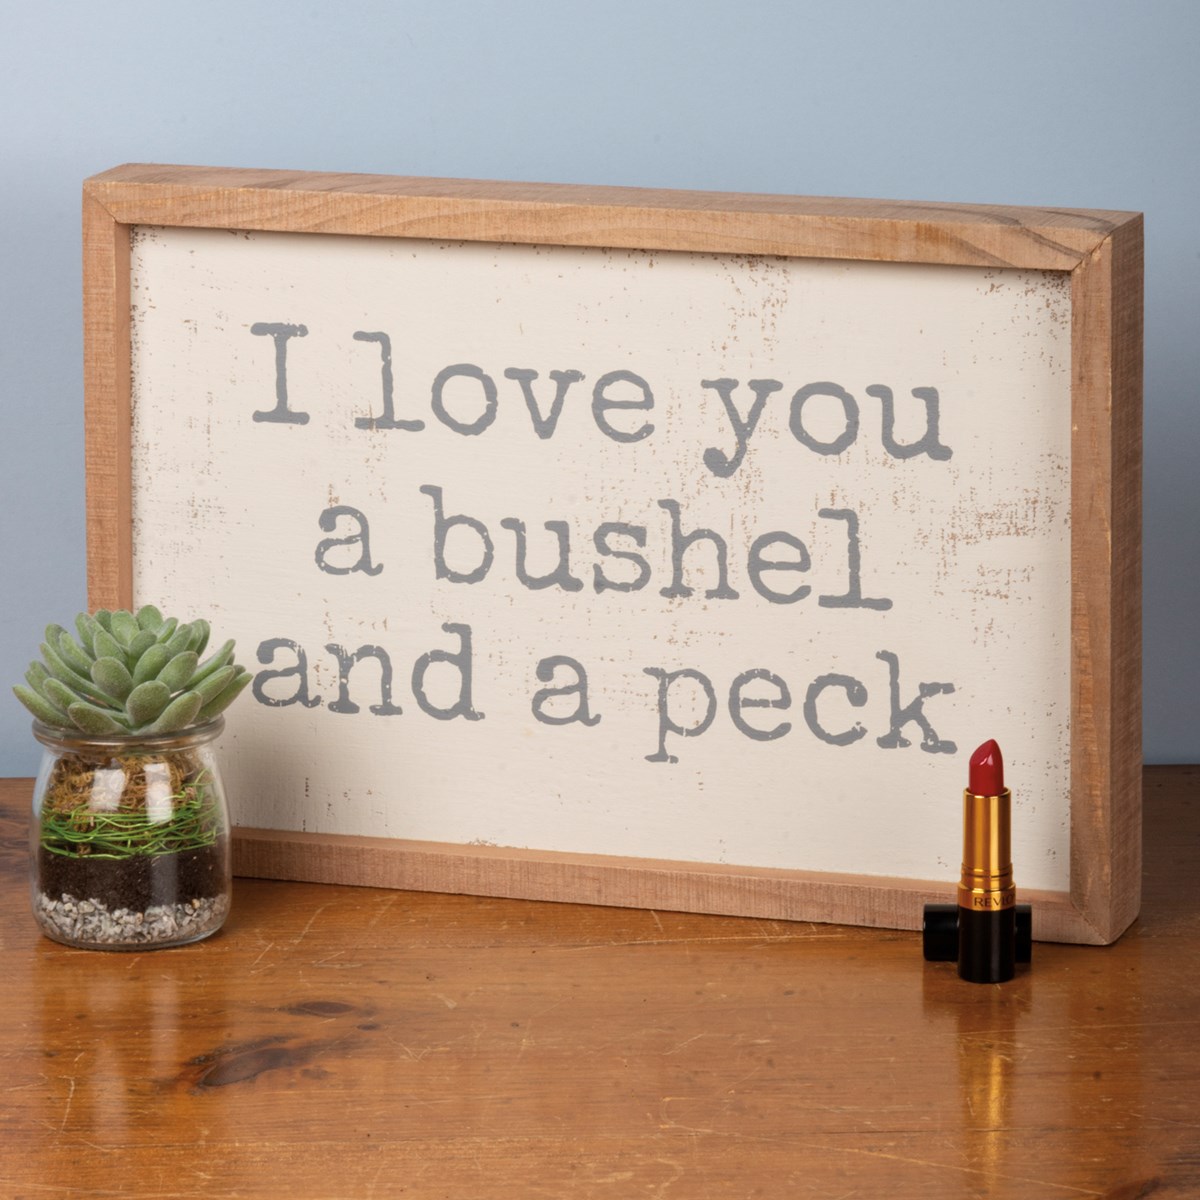 Inset Box Sign - I Love You A Bushel And A Peck - 15" x 10" x 1.75" - Wood